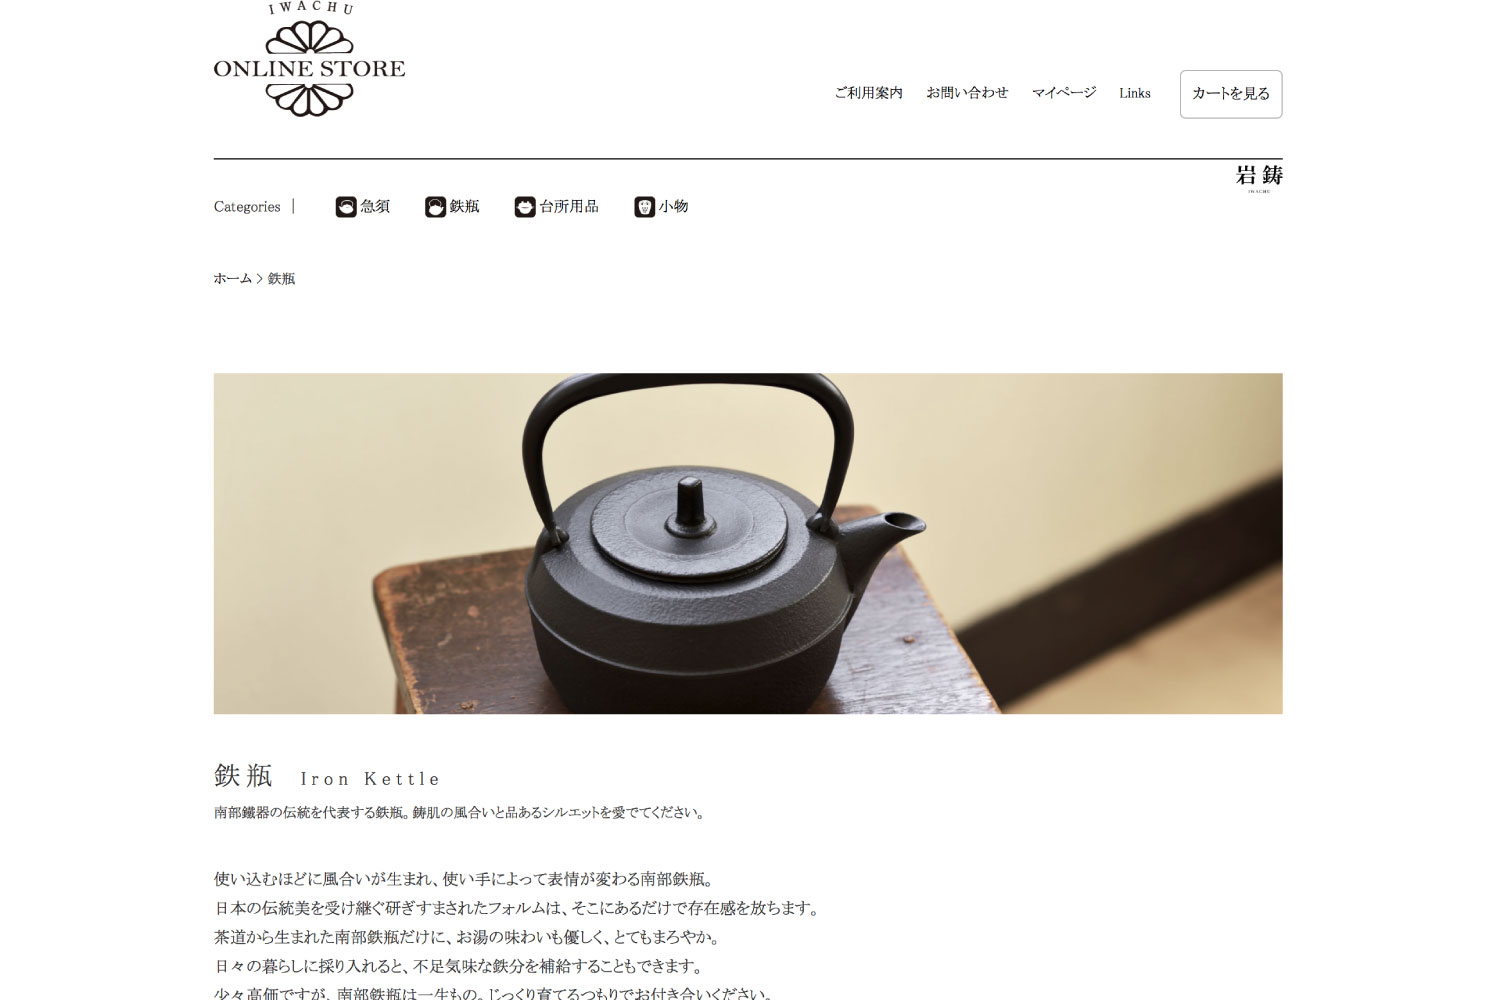 IWACHU Online store web design